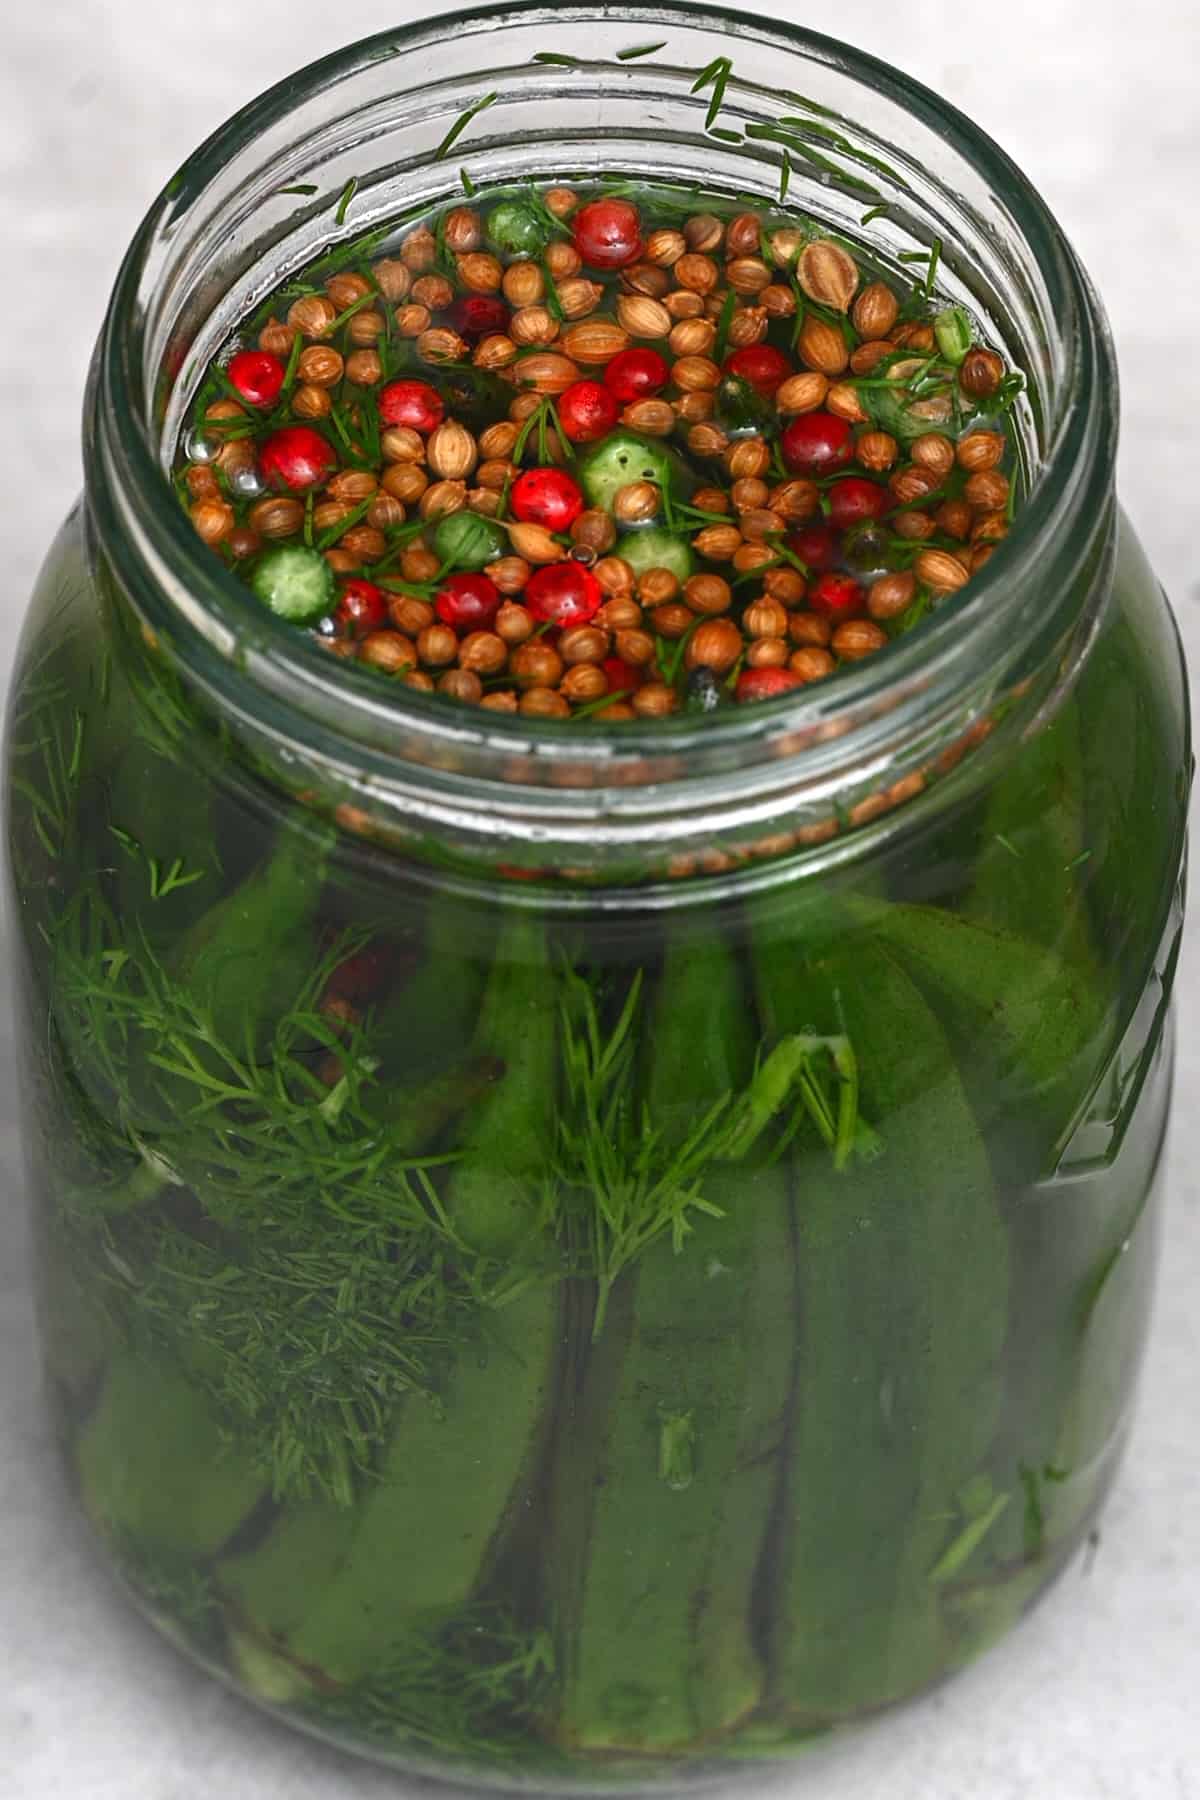 Jar filled with pickling brine